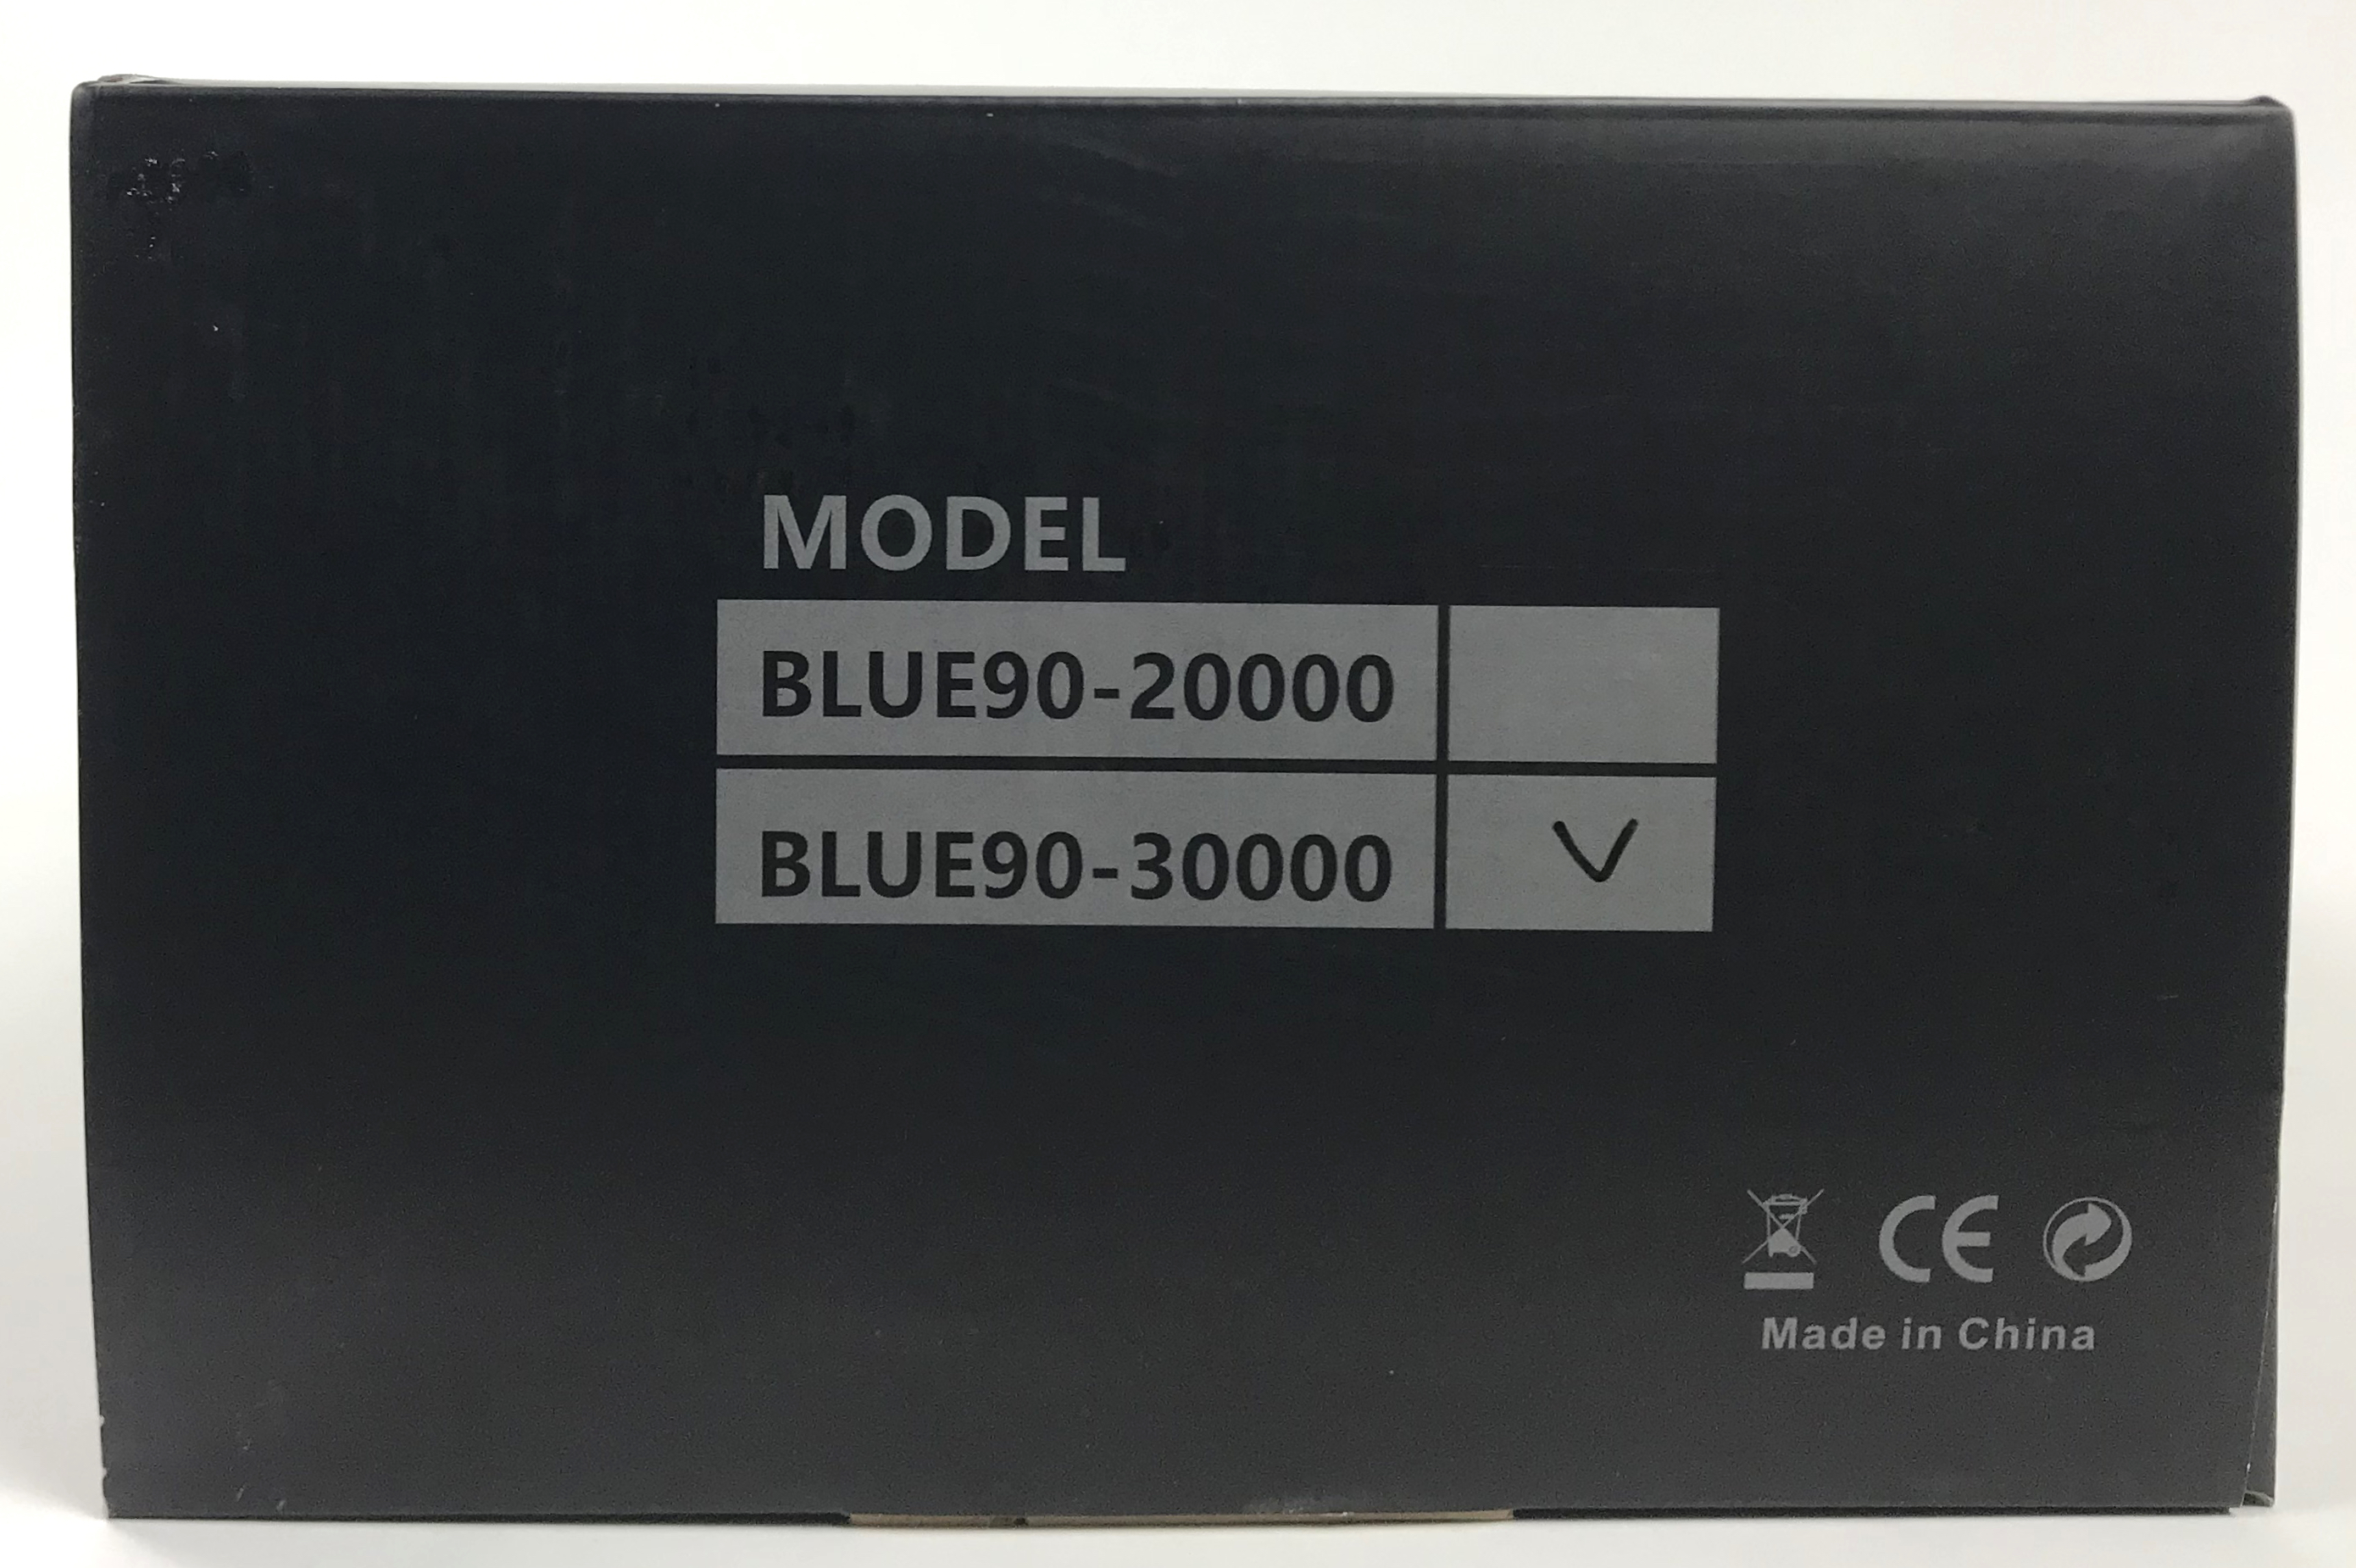 Platinum DC Blue 30000 Pump - 7895 gph